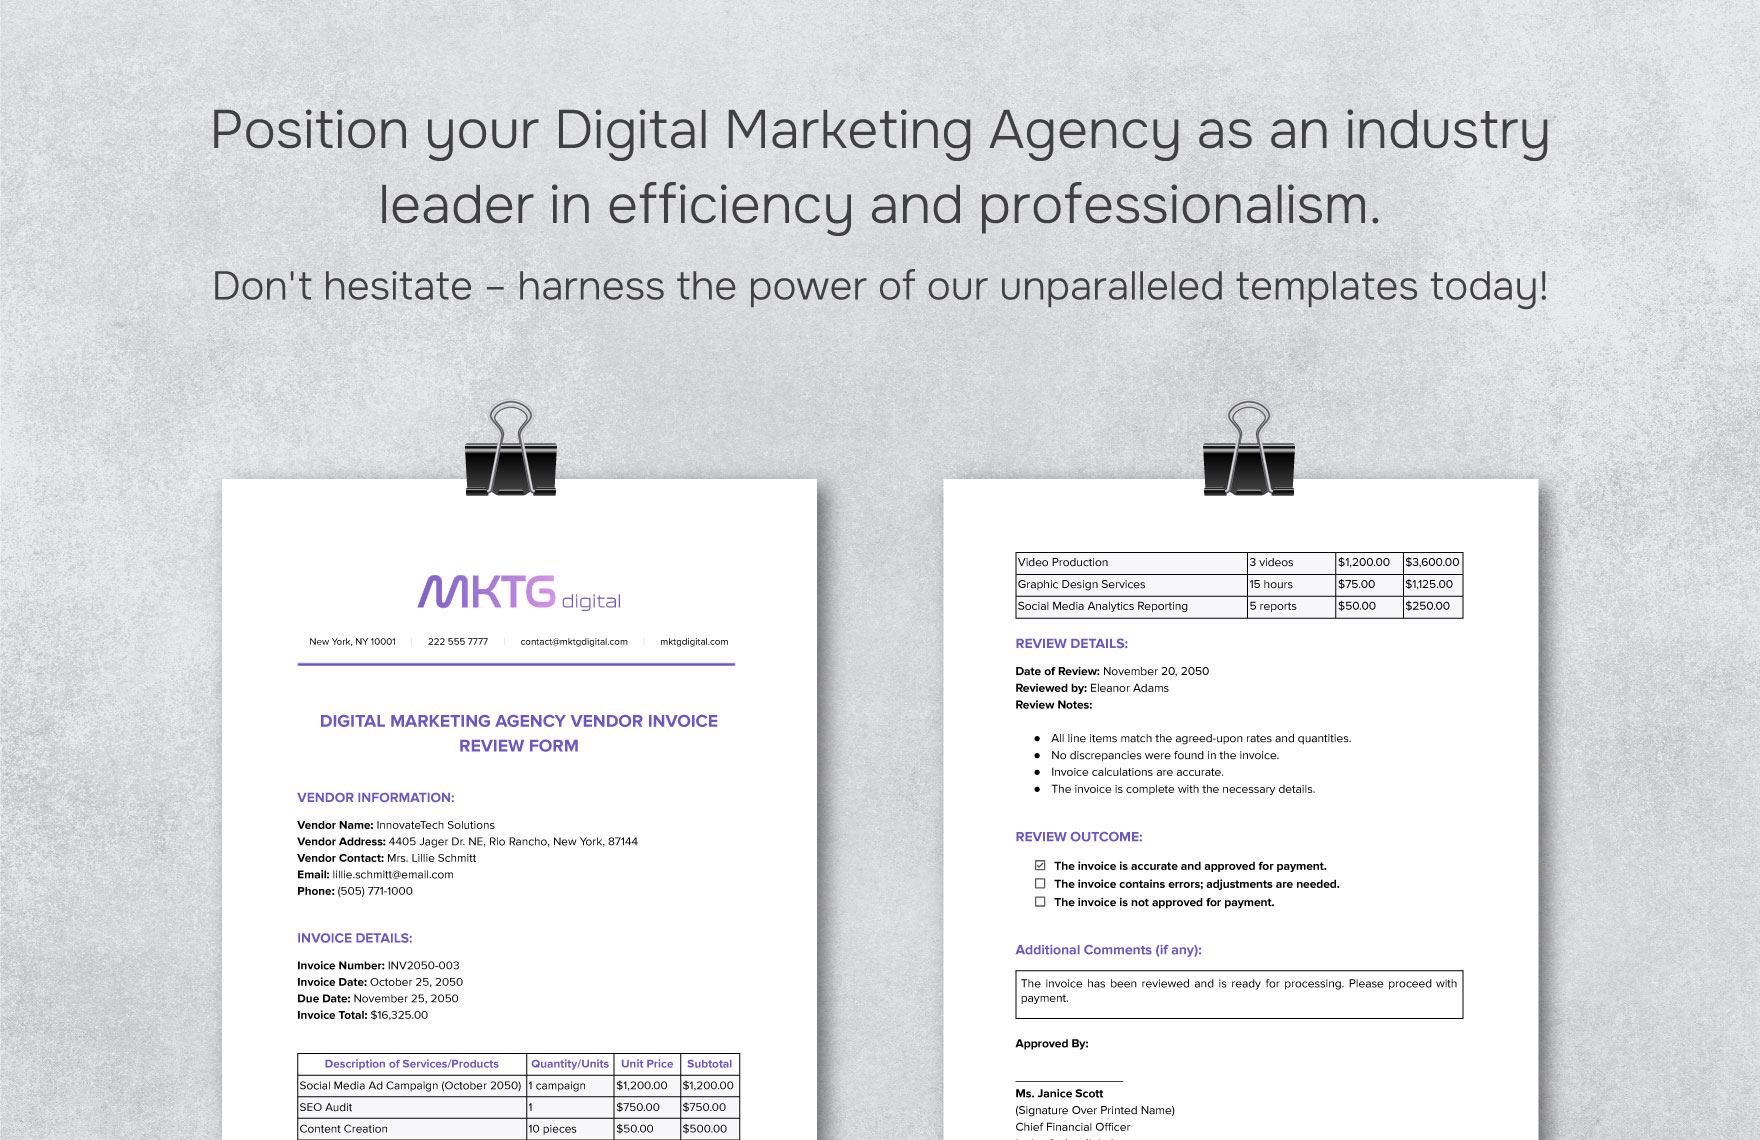 Digital Marketing Agency Vendor Invoice Review Form Template